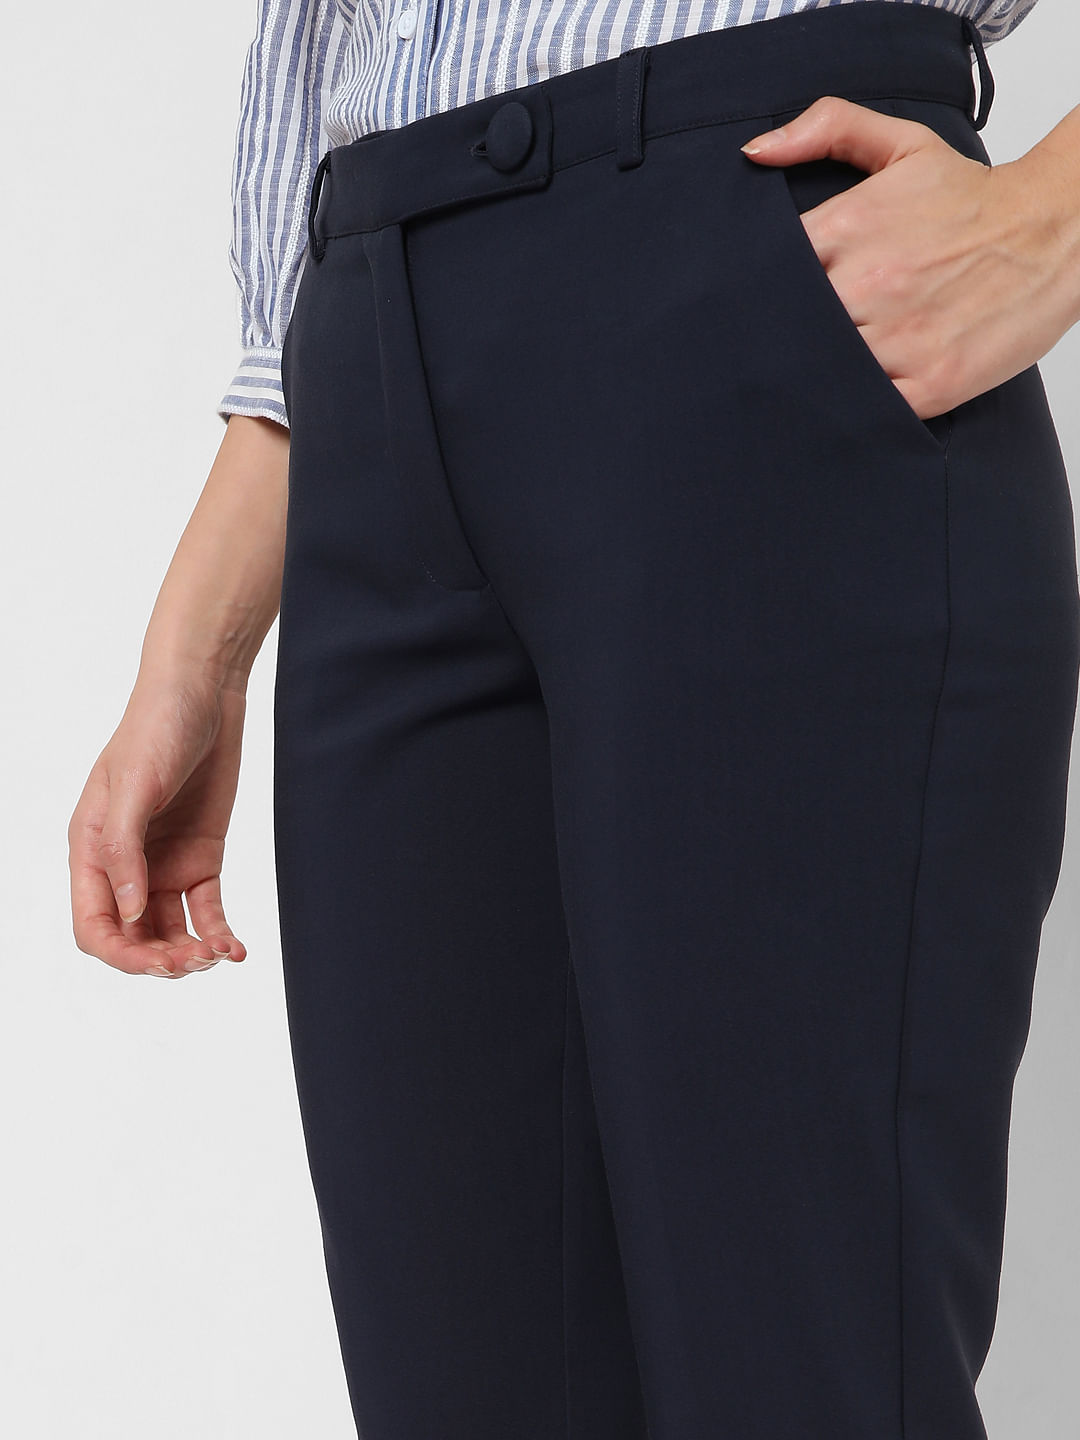 ▷ Women's Trousers | Office Pants 2020 | INISESS